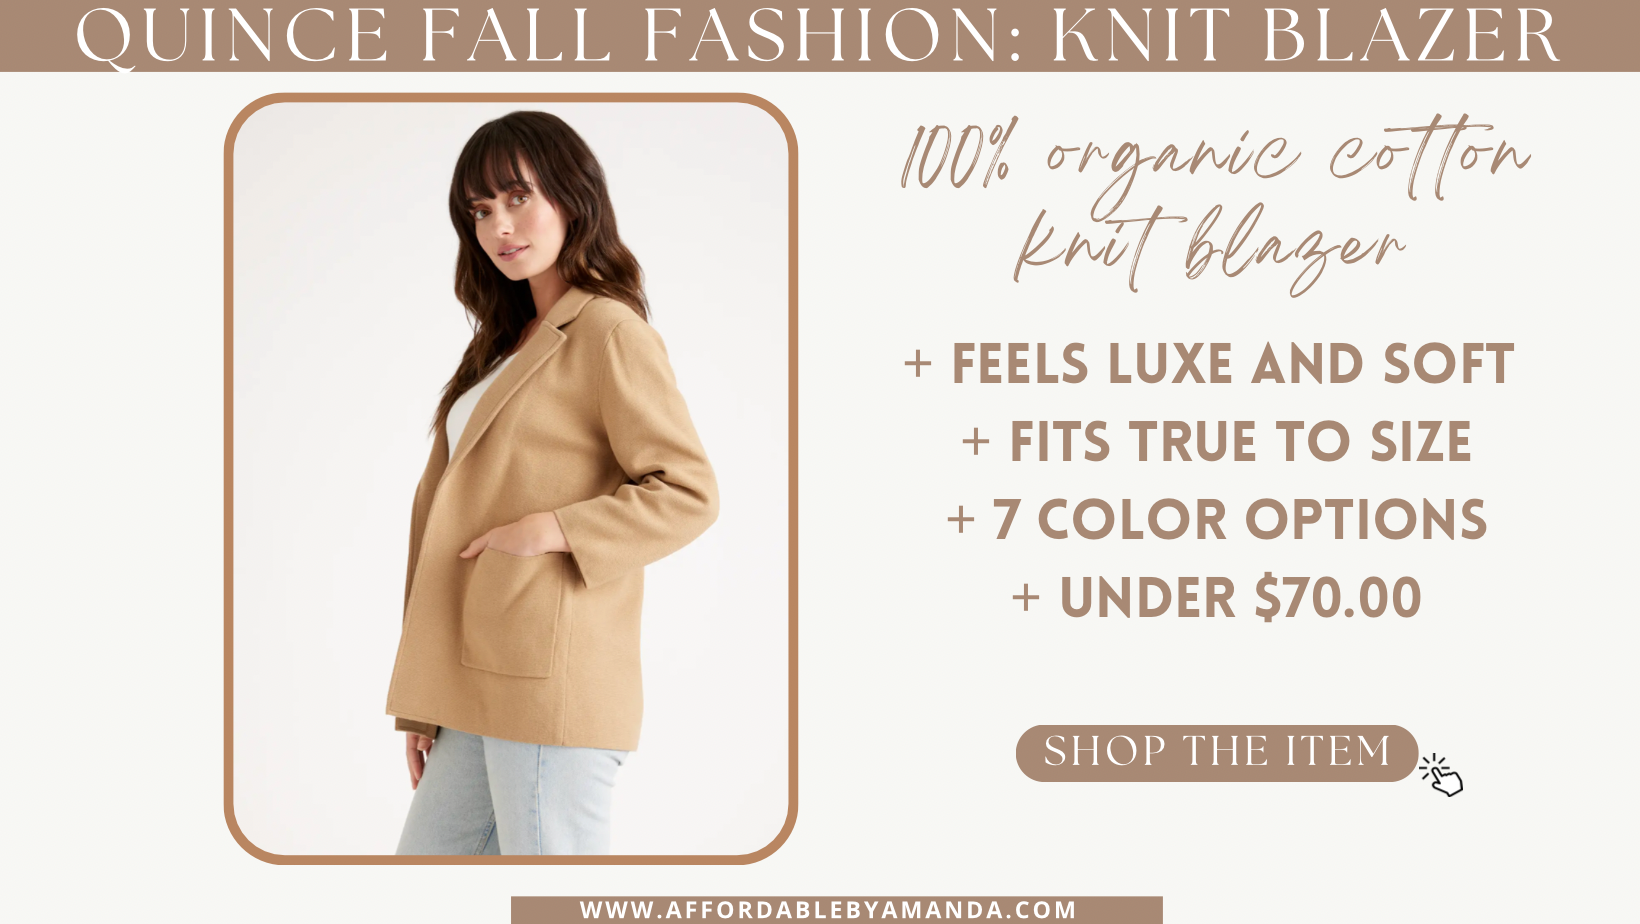 100% Organic Cotton Knit Blazer - Quince Fall Fashion Finds